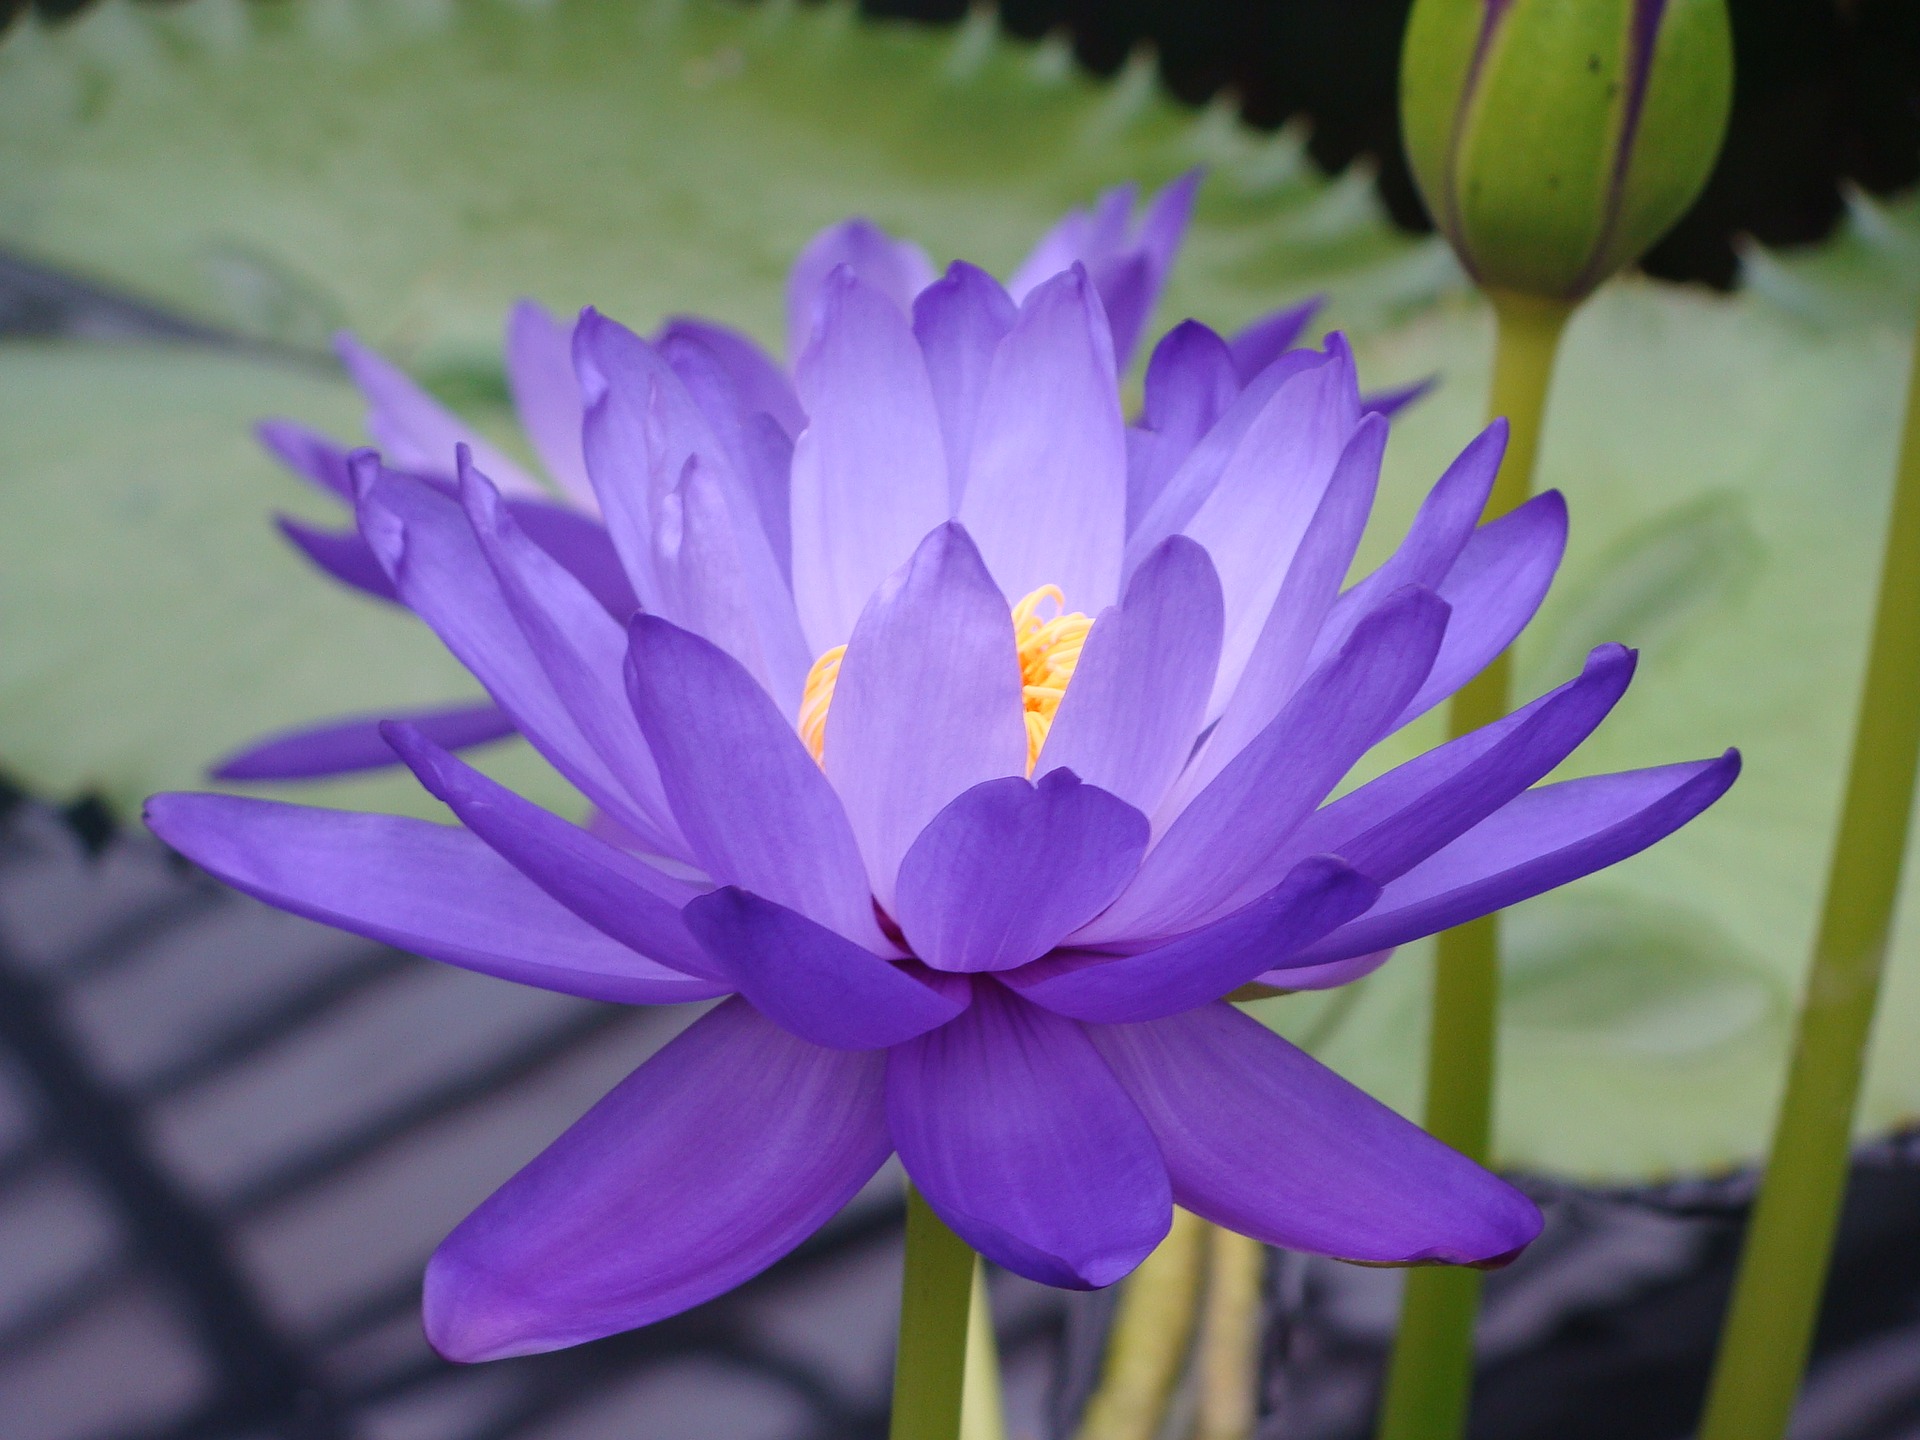 Medicinal benefits of Blue lotus - Usage and consumption